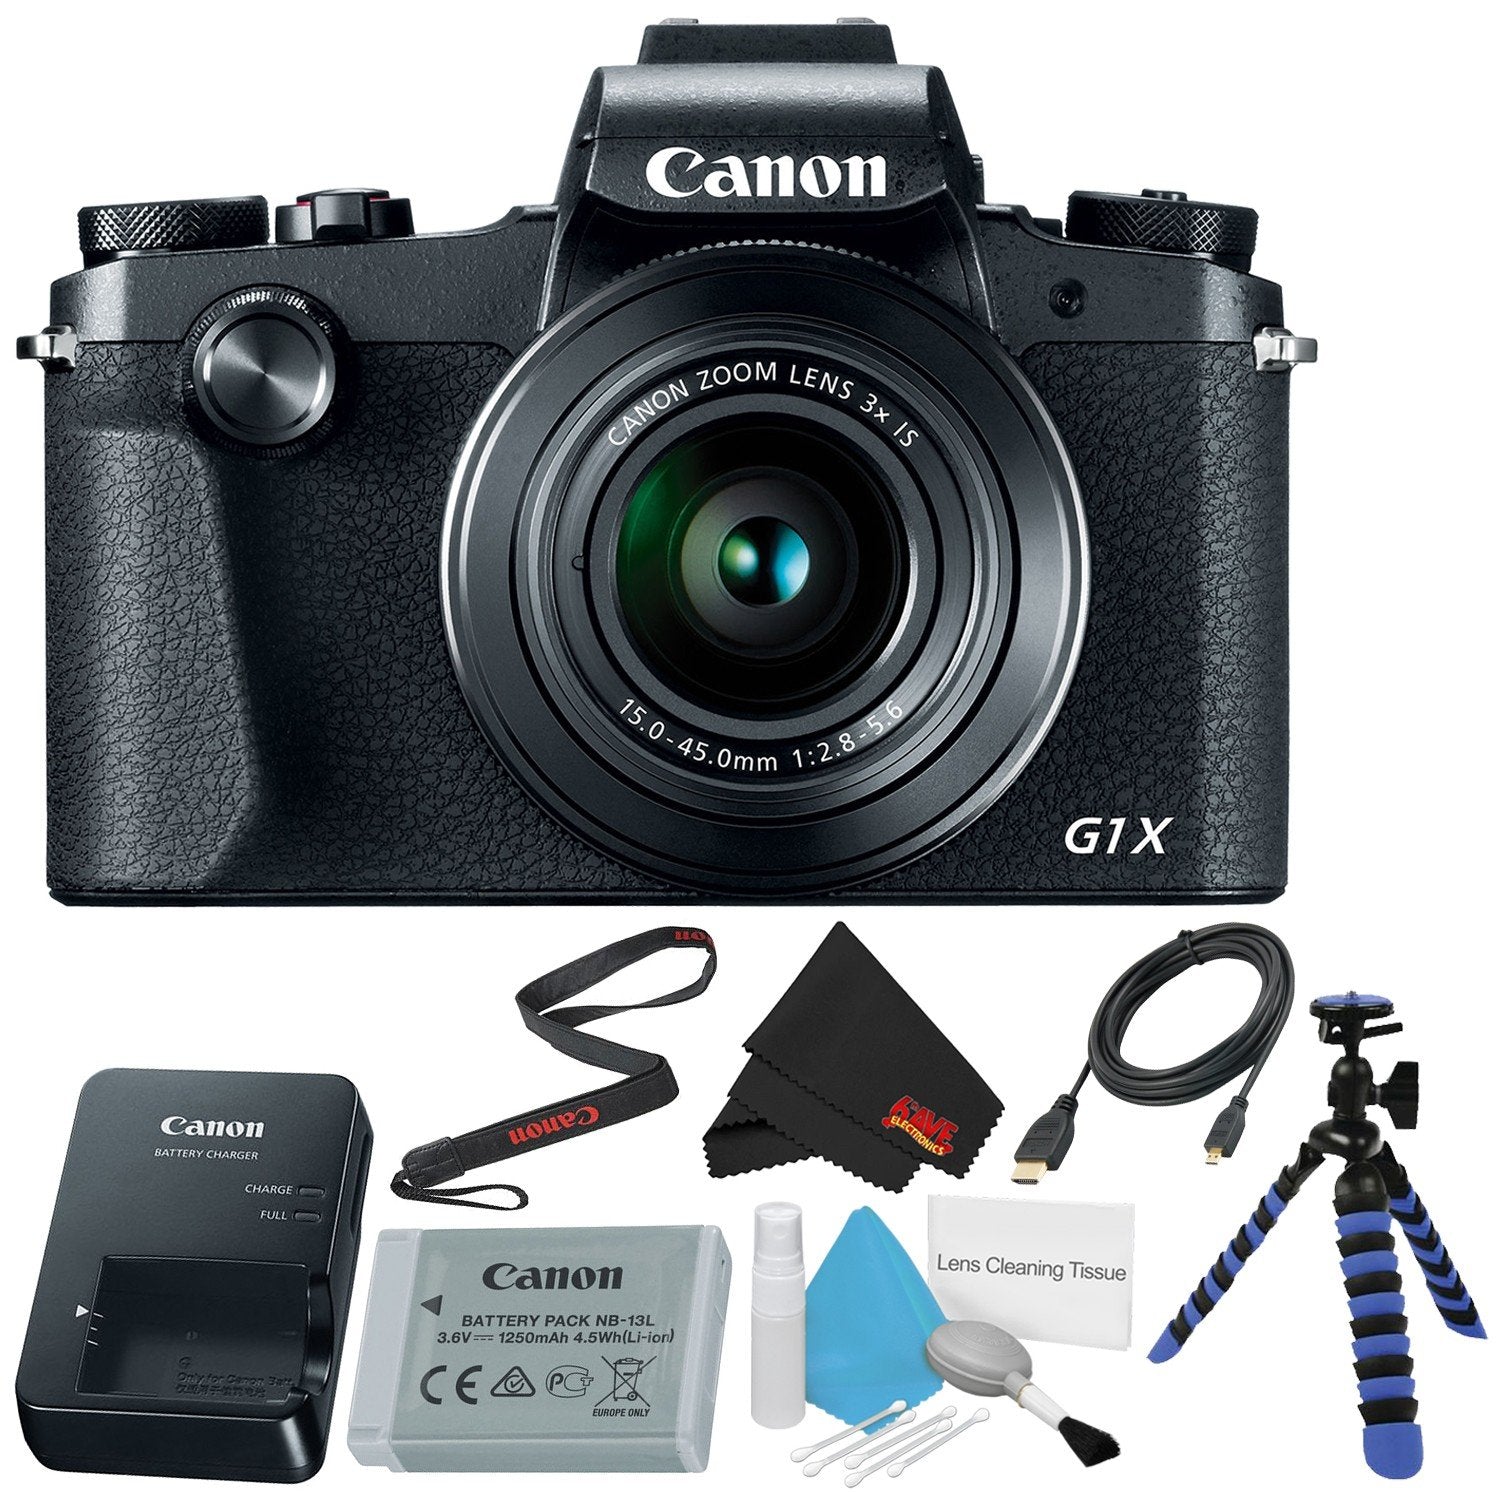 6Ave Canon PowerShot G1 X Mark III Digital Camera #2208C001 International Version (No Warranty) + Deluxe Cleaning Kit +